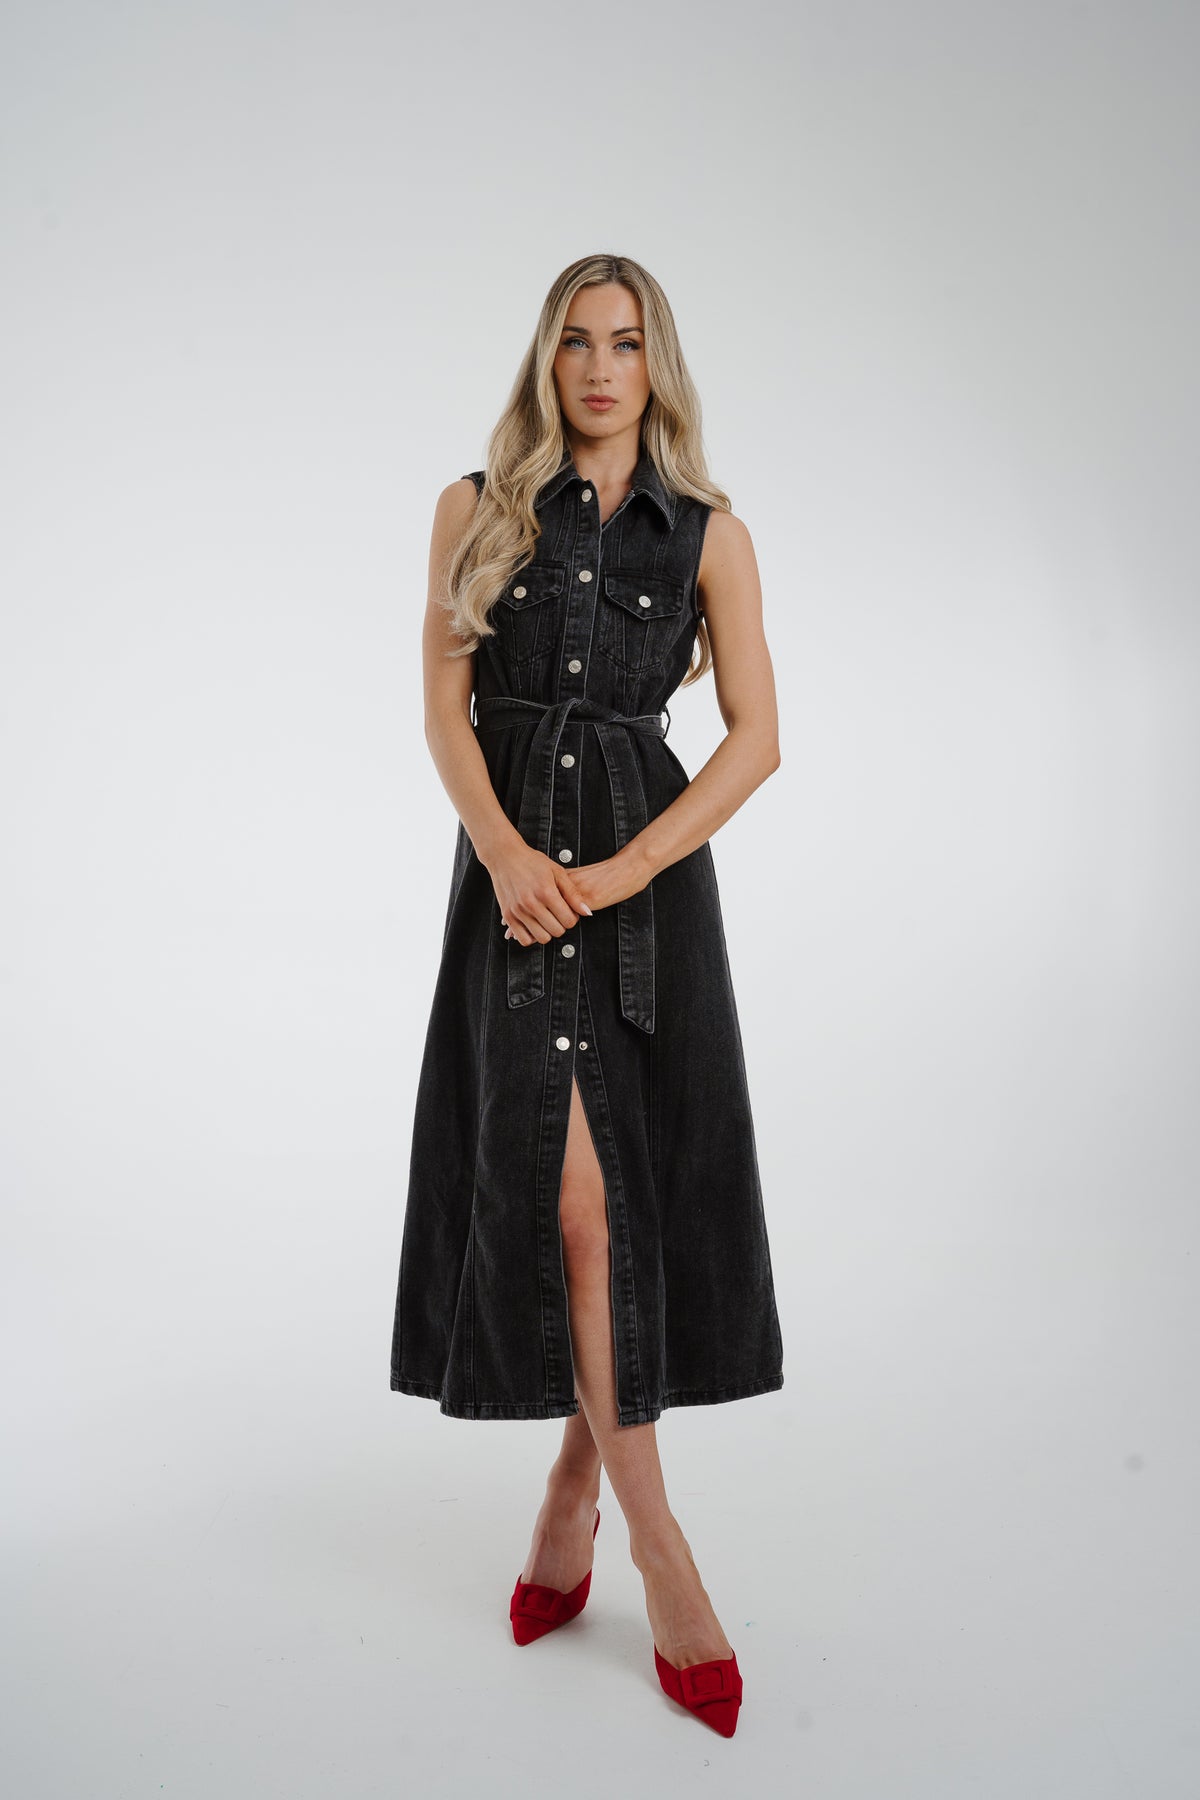 Cora Sleeveless Denim Dress In Black Wash